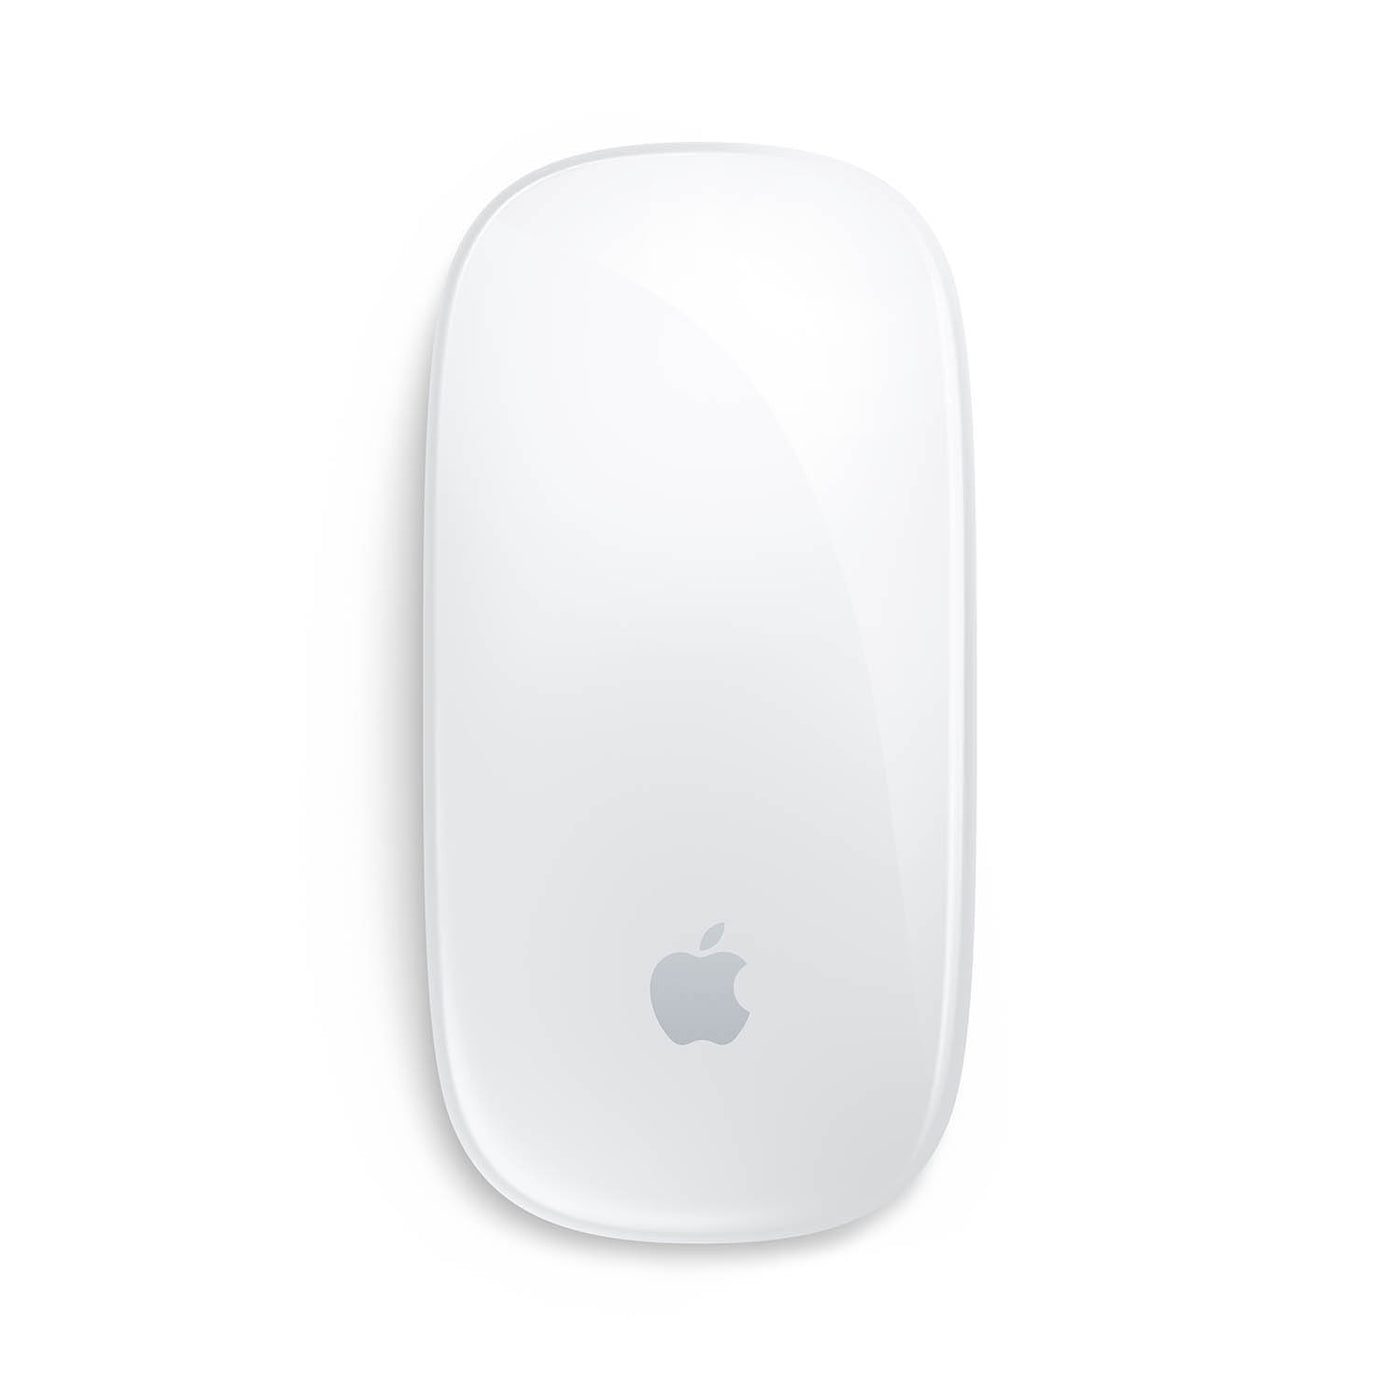 Apple Magic Mouse – The Bowdoin Store